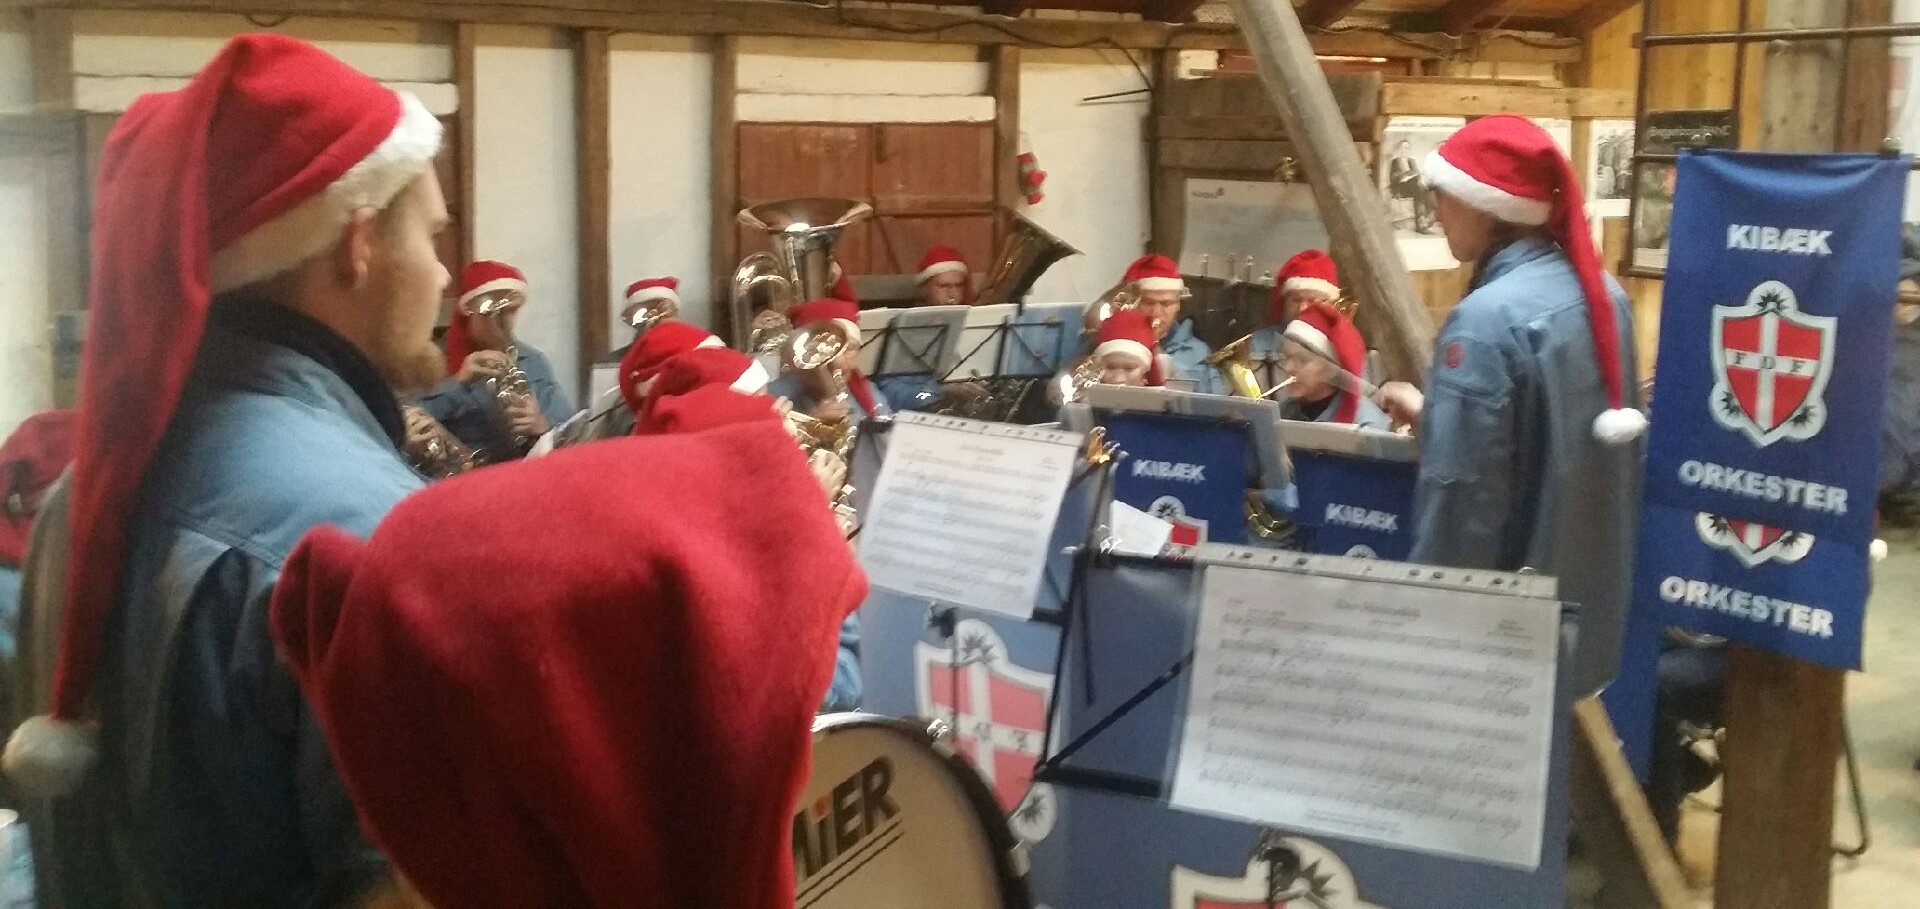 FDF-musikere med nissehuer spiller julemusik